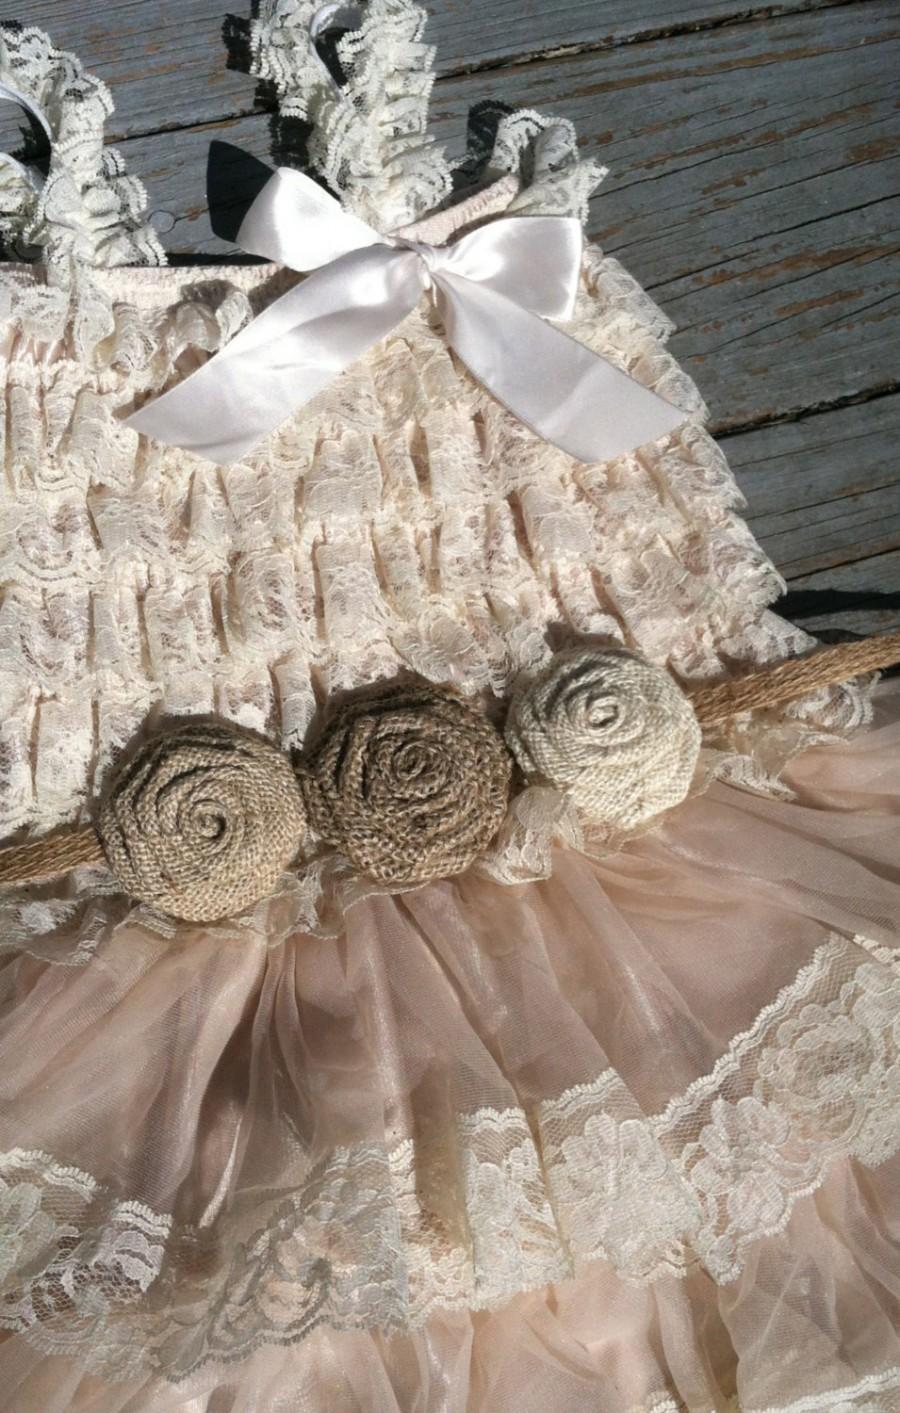 Hochzeit - Rustic Flower Girl Dress Lace Pettidress/Rustic Flower Girl Outfit/Wheat Cream Flowergirl/Country Wedding/Burlap/Jute Belt